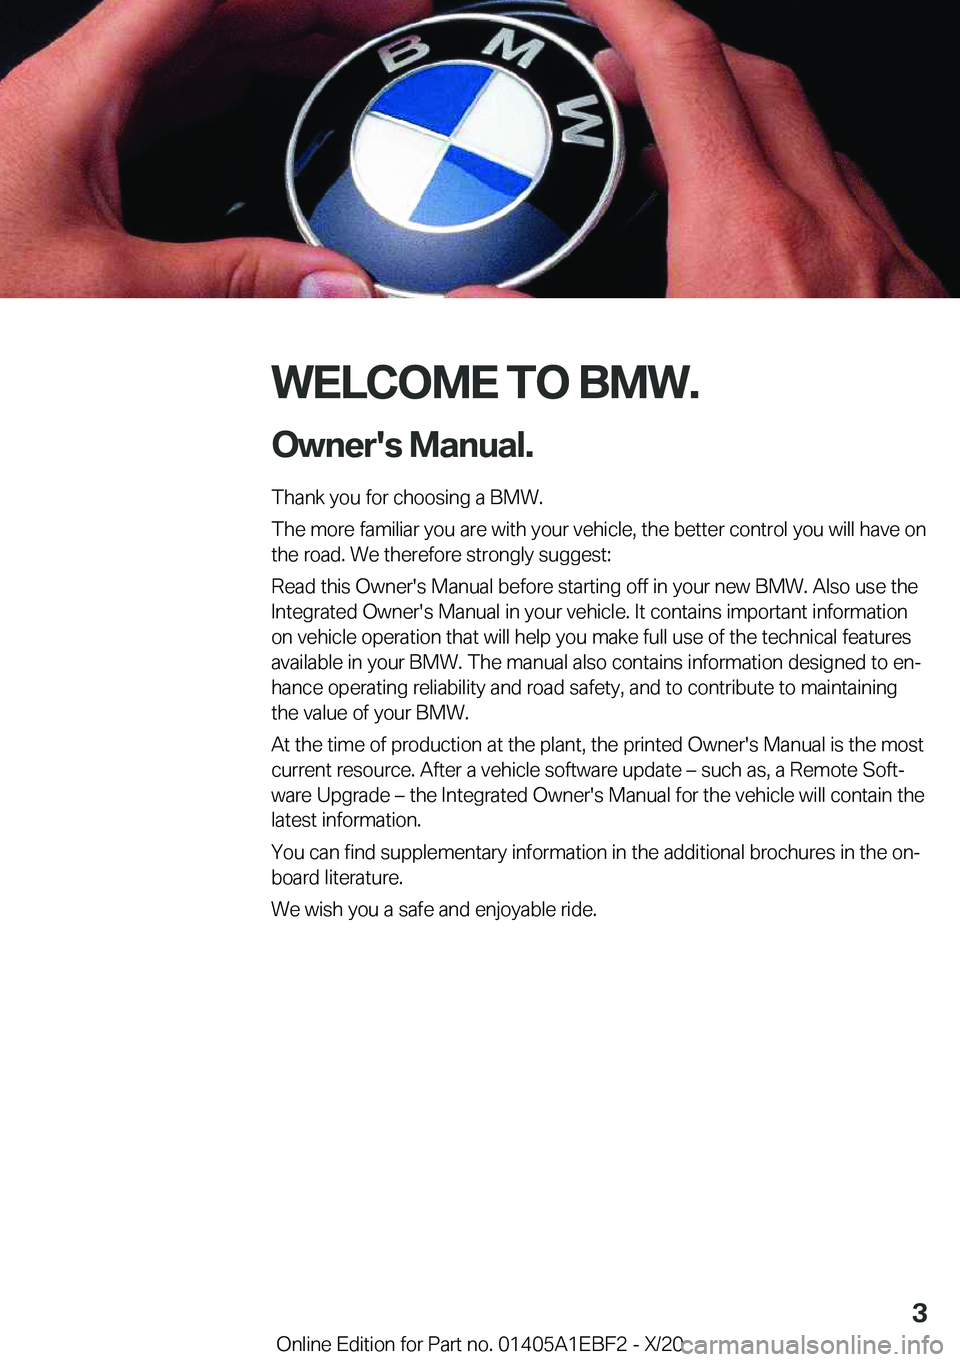 BMW 3 SERIES 2021  Owners Manual �W�E�L�C�O�M�E��T�O��B�M�W�.�O�w�n�e�r�'�s��M�a�n�u�a�l�.
�T�h�a�n�k��y�o�u��f�o�r��c�h�o�o�s�i�n�g��a��B�M�W�.
�T�h�e��m�o�r�e��f�a�m�i�l�i�a�r��y�o�u��a�r�e��w�i�t�h��y�o�u�r��v�e